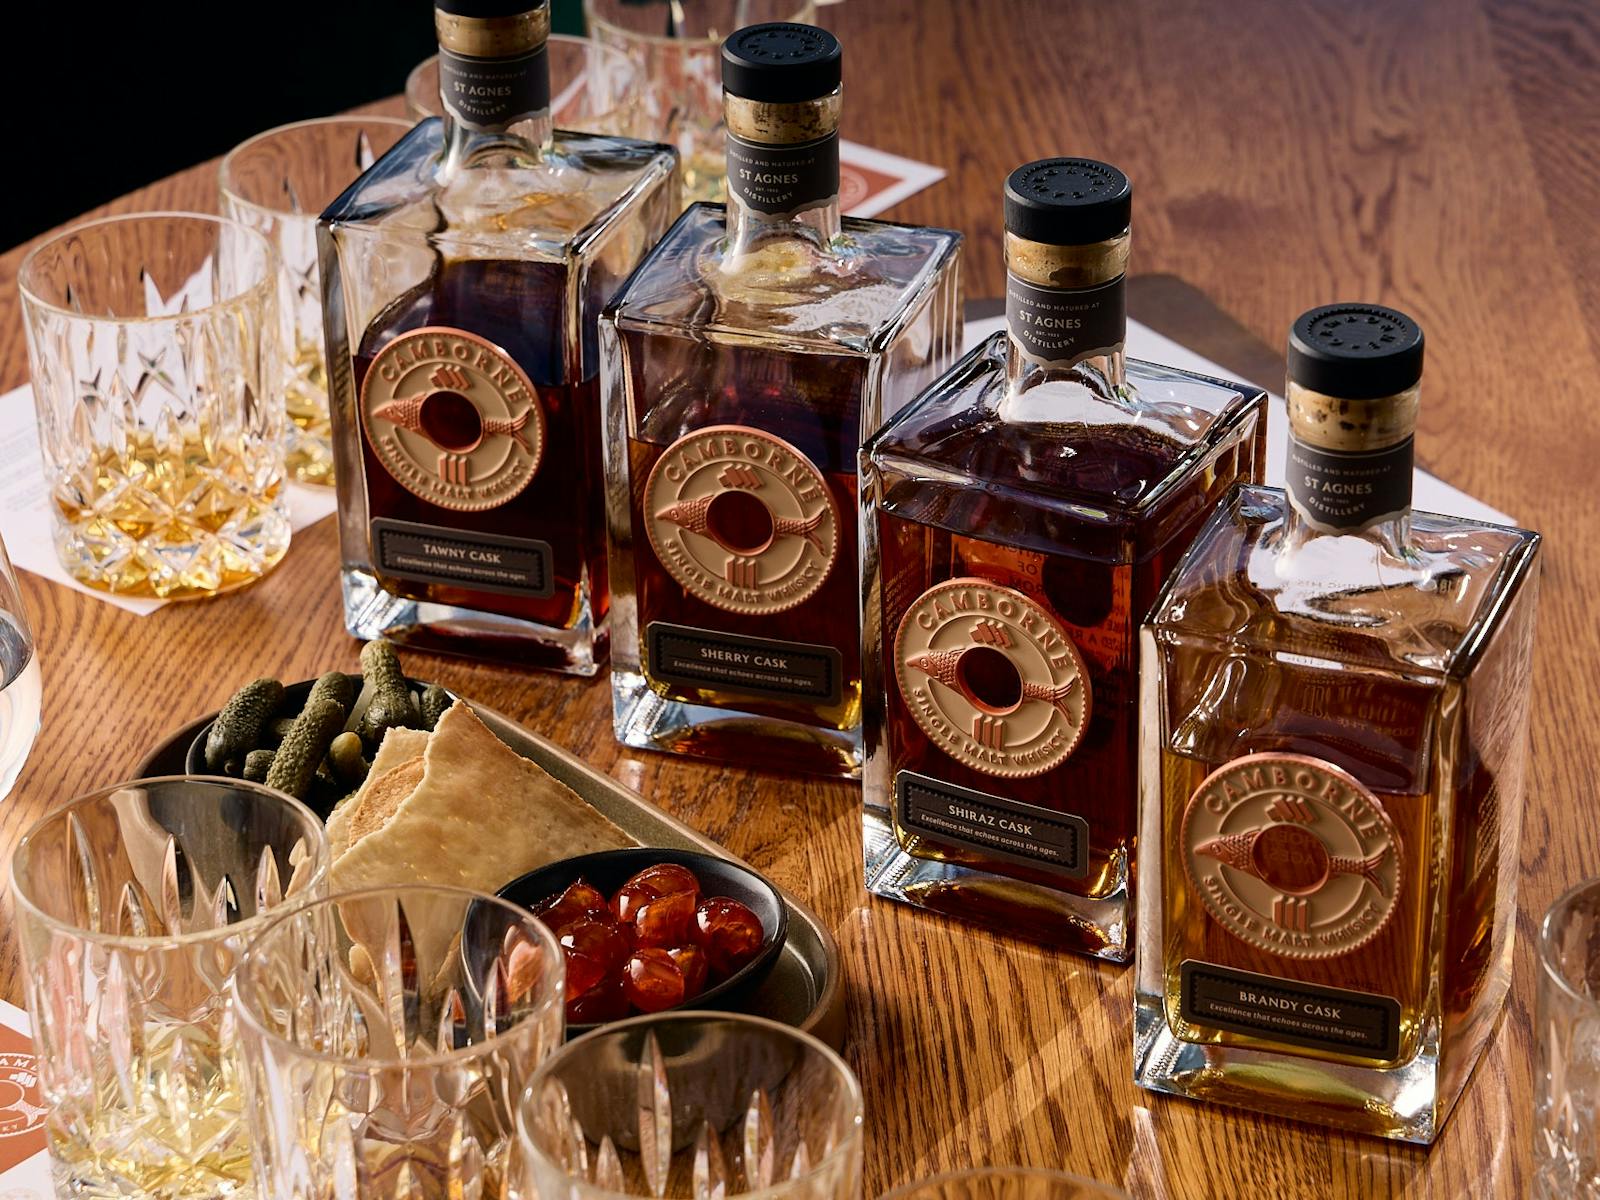 Taste four single malt whiskies created by the St Agnes Distillery, accompanied by nibbles